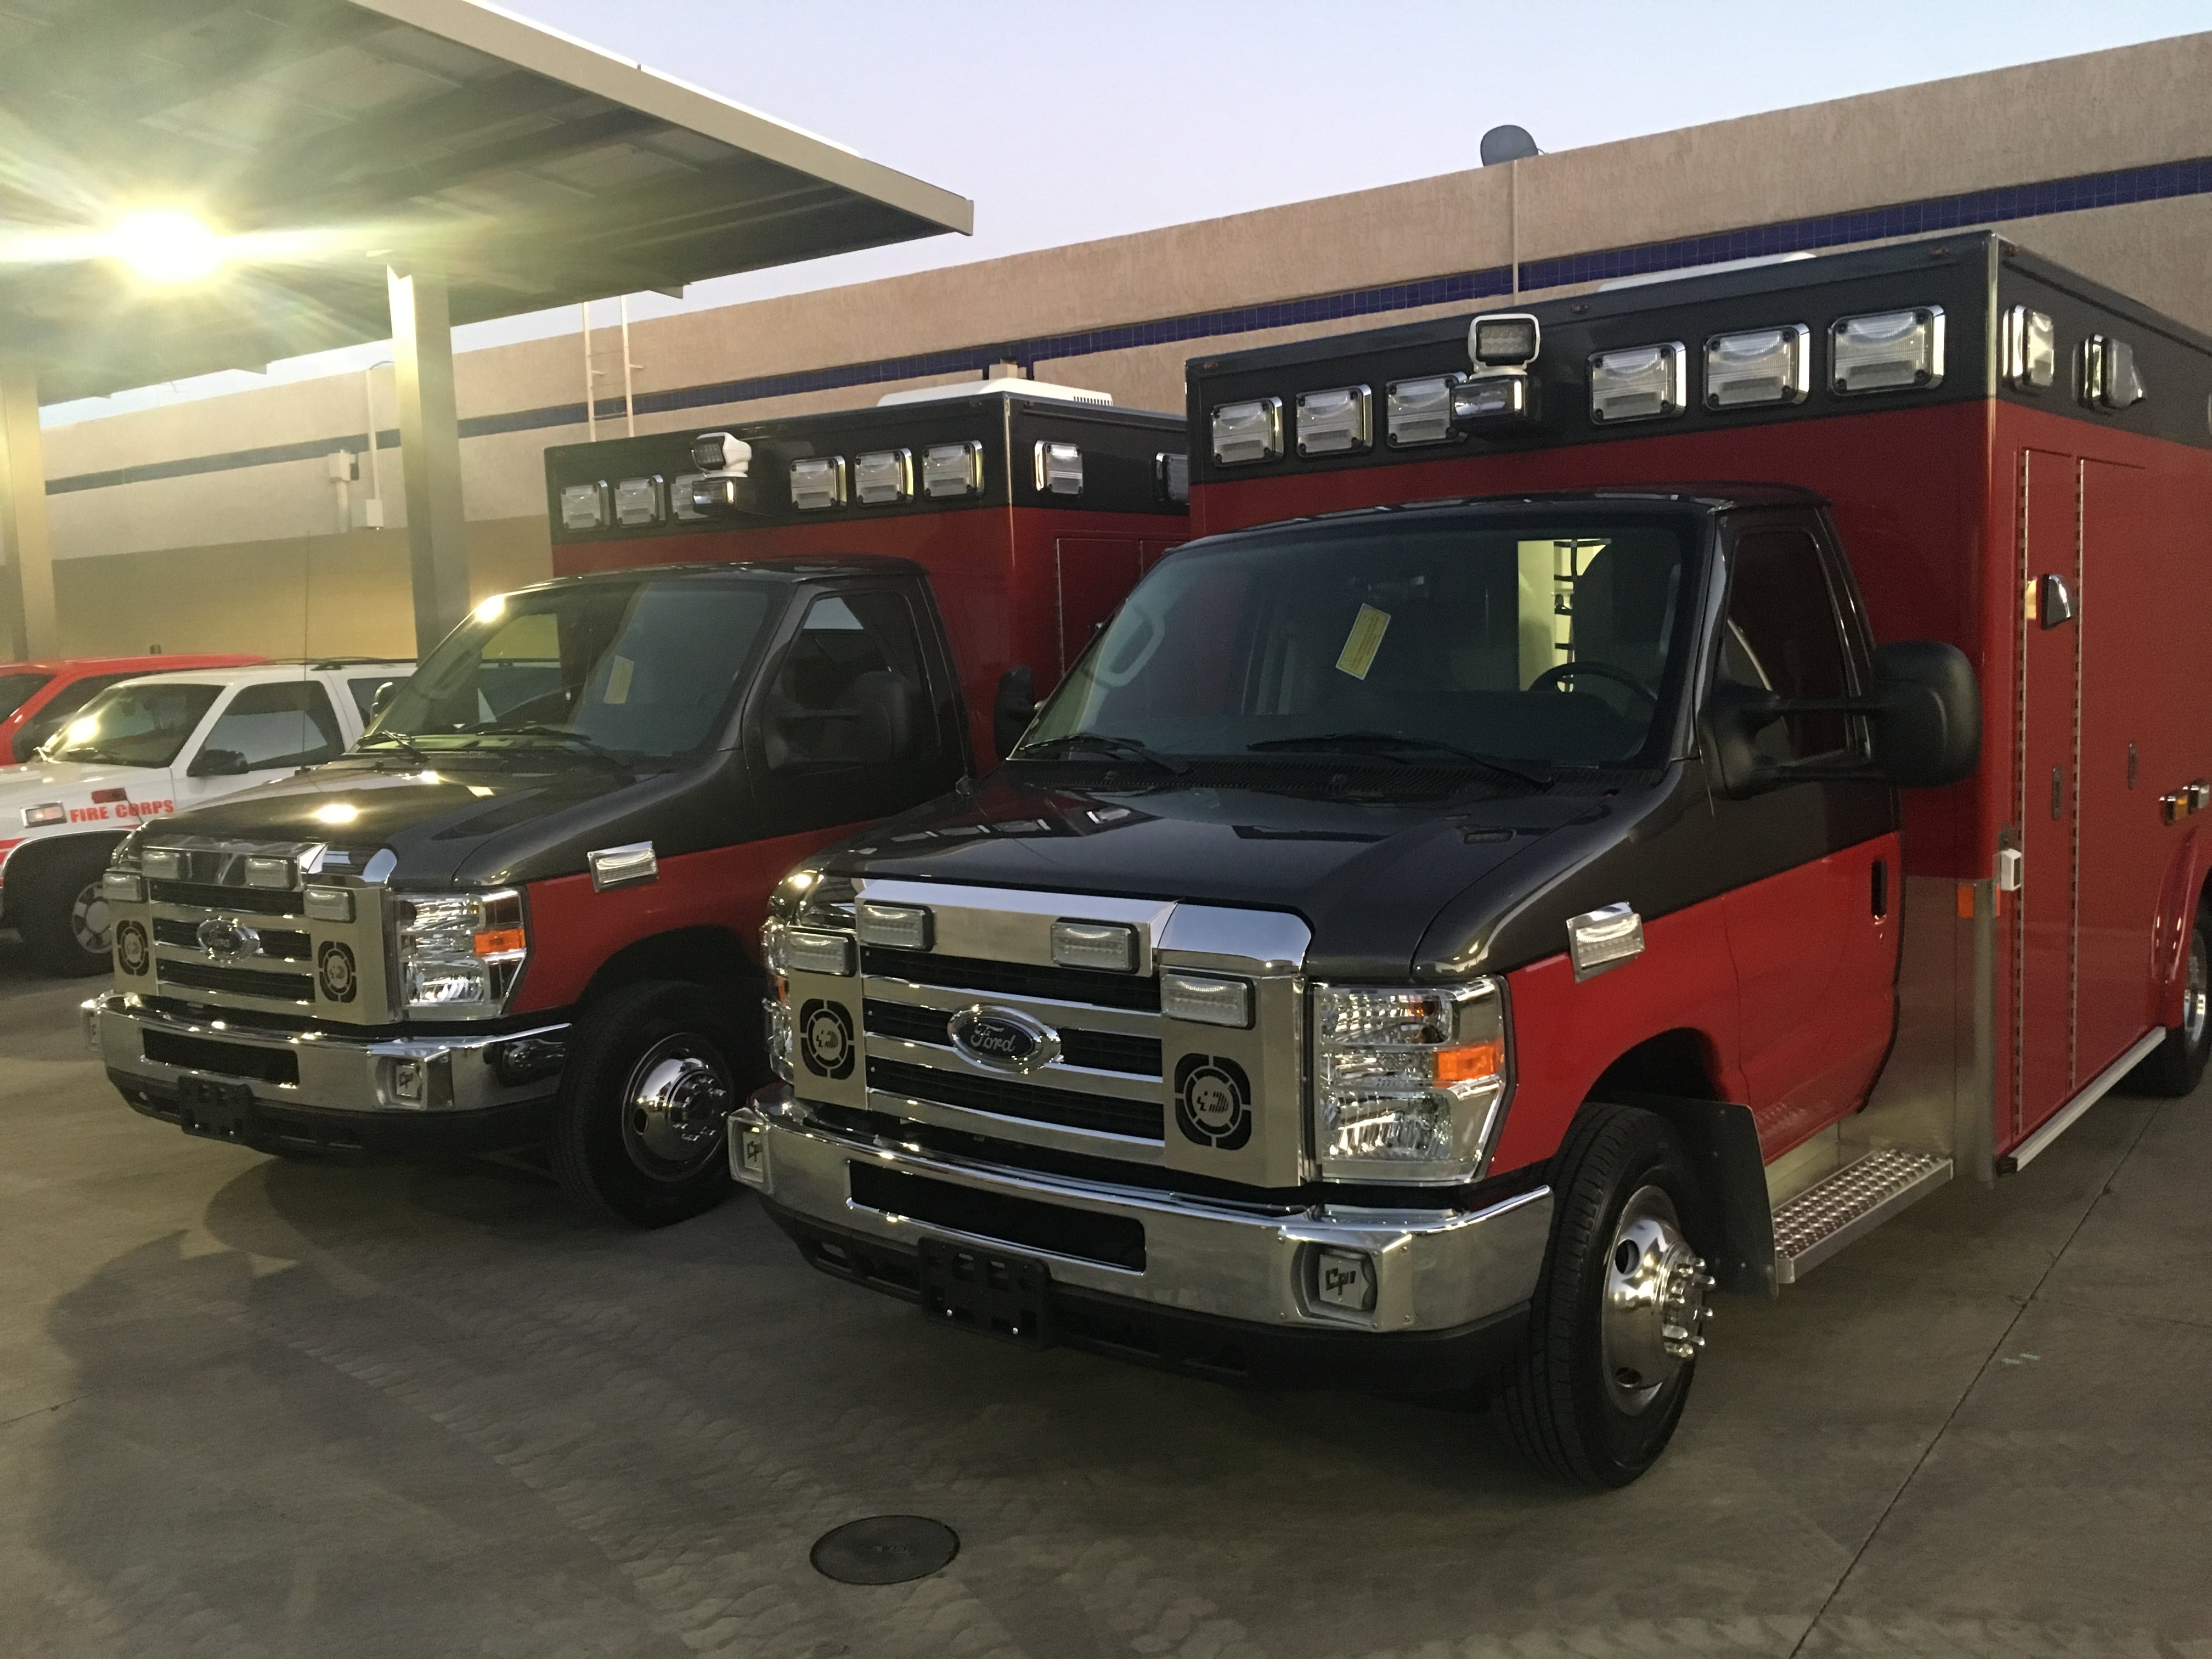 Arizona Fire & Medical Authority: 2 Demers MX164 Type 3s